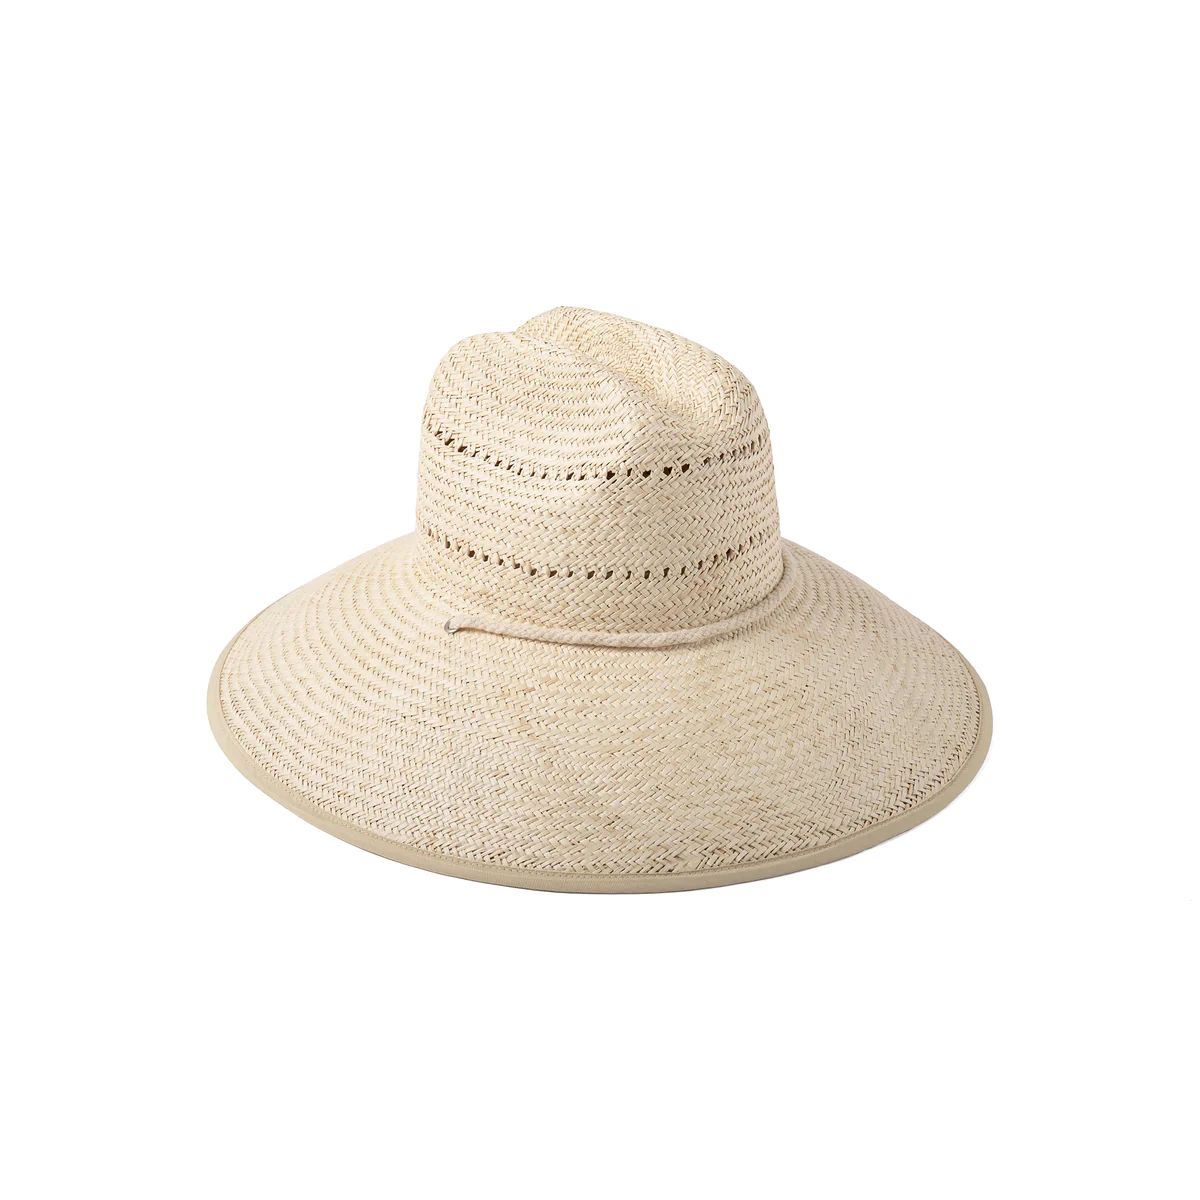 The Vista - Straw Cowboy Hat in Natural | Lack of Color US | Lack of Color